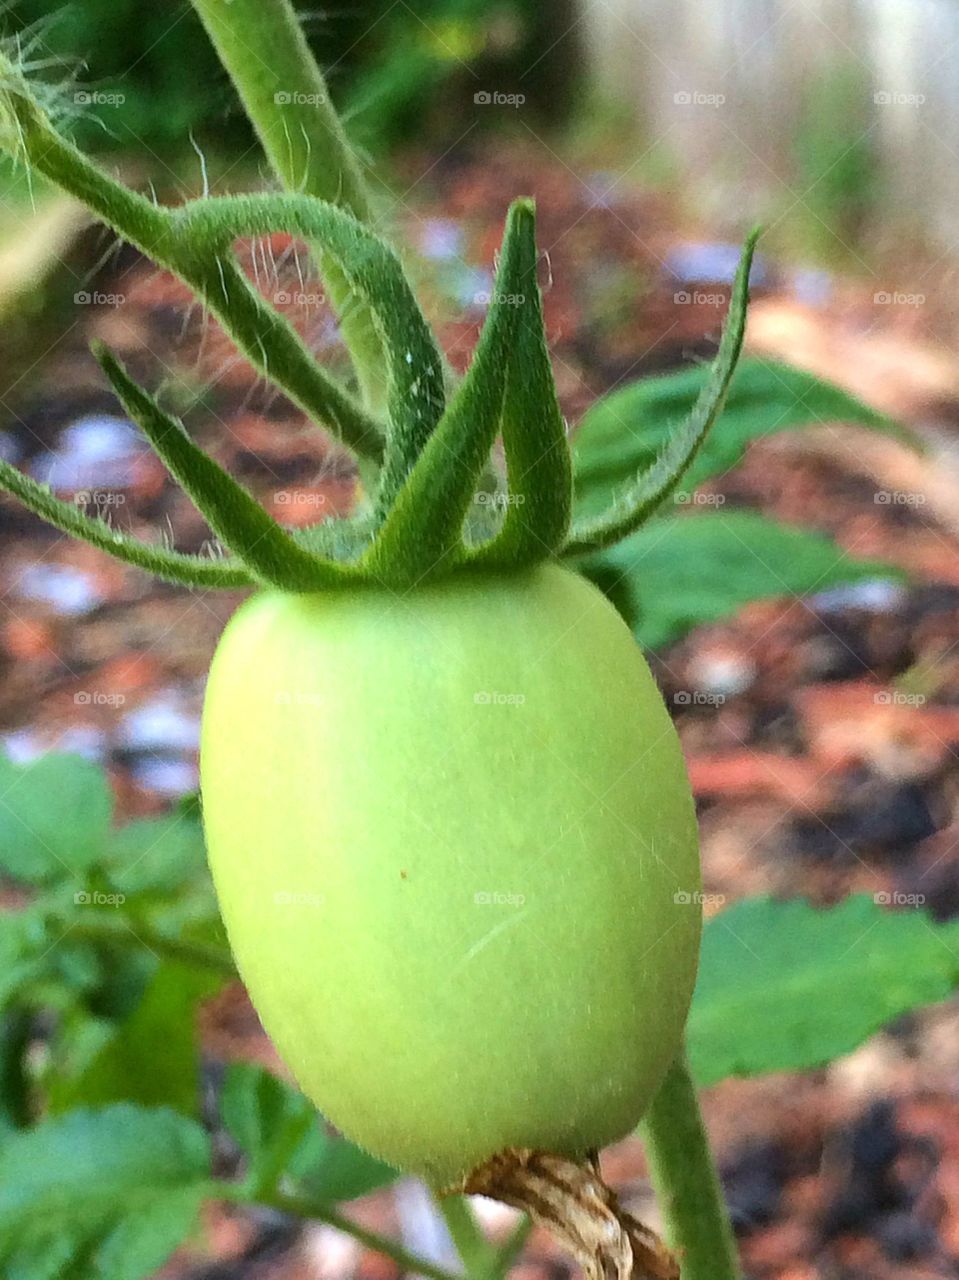 Baby tomato growing